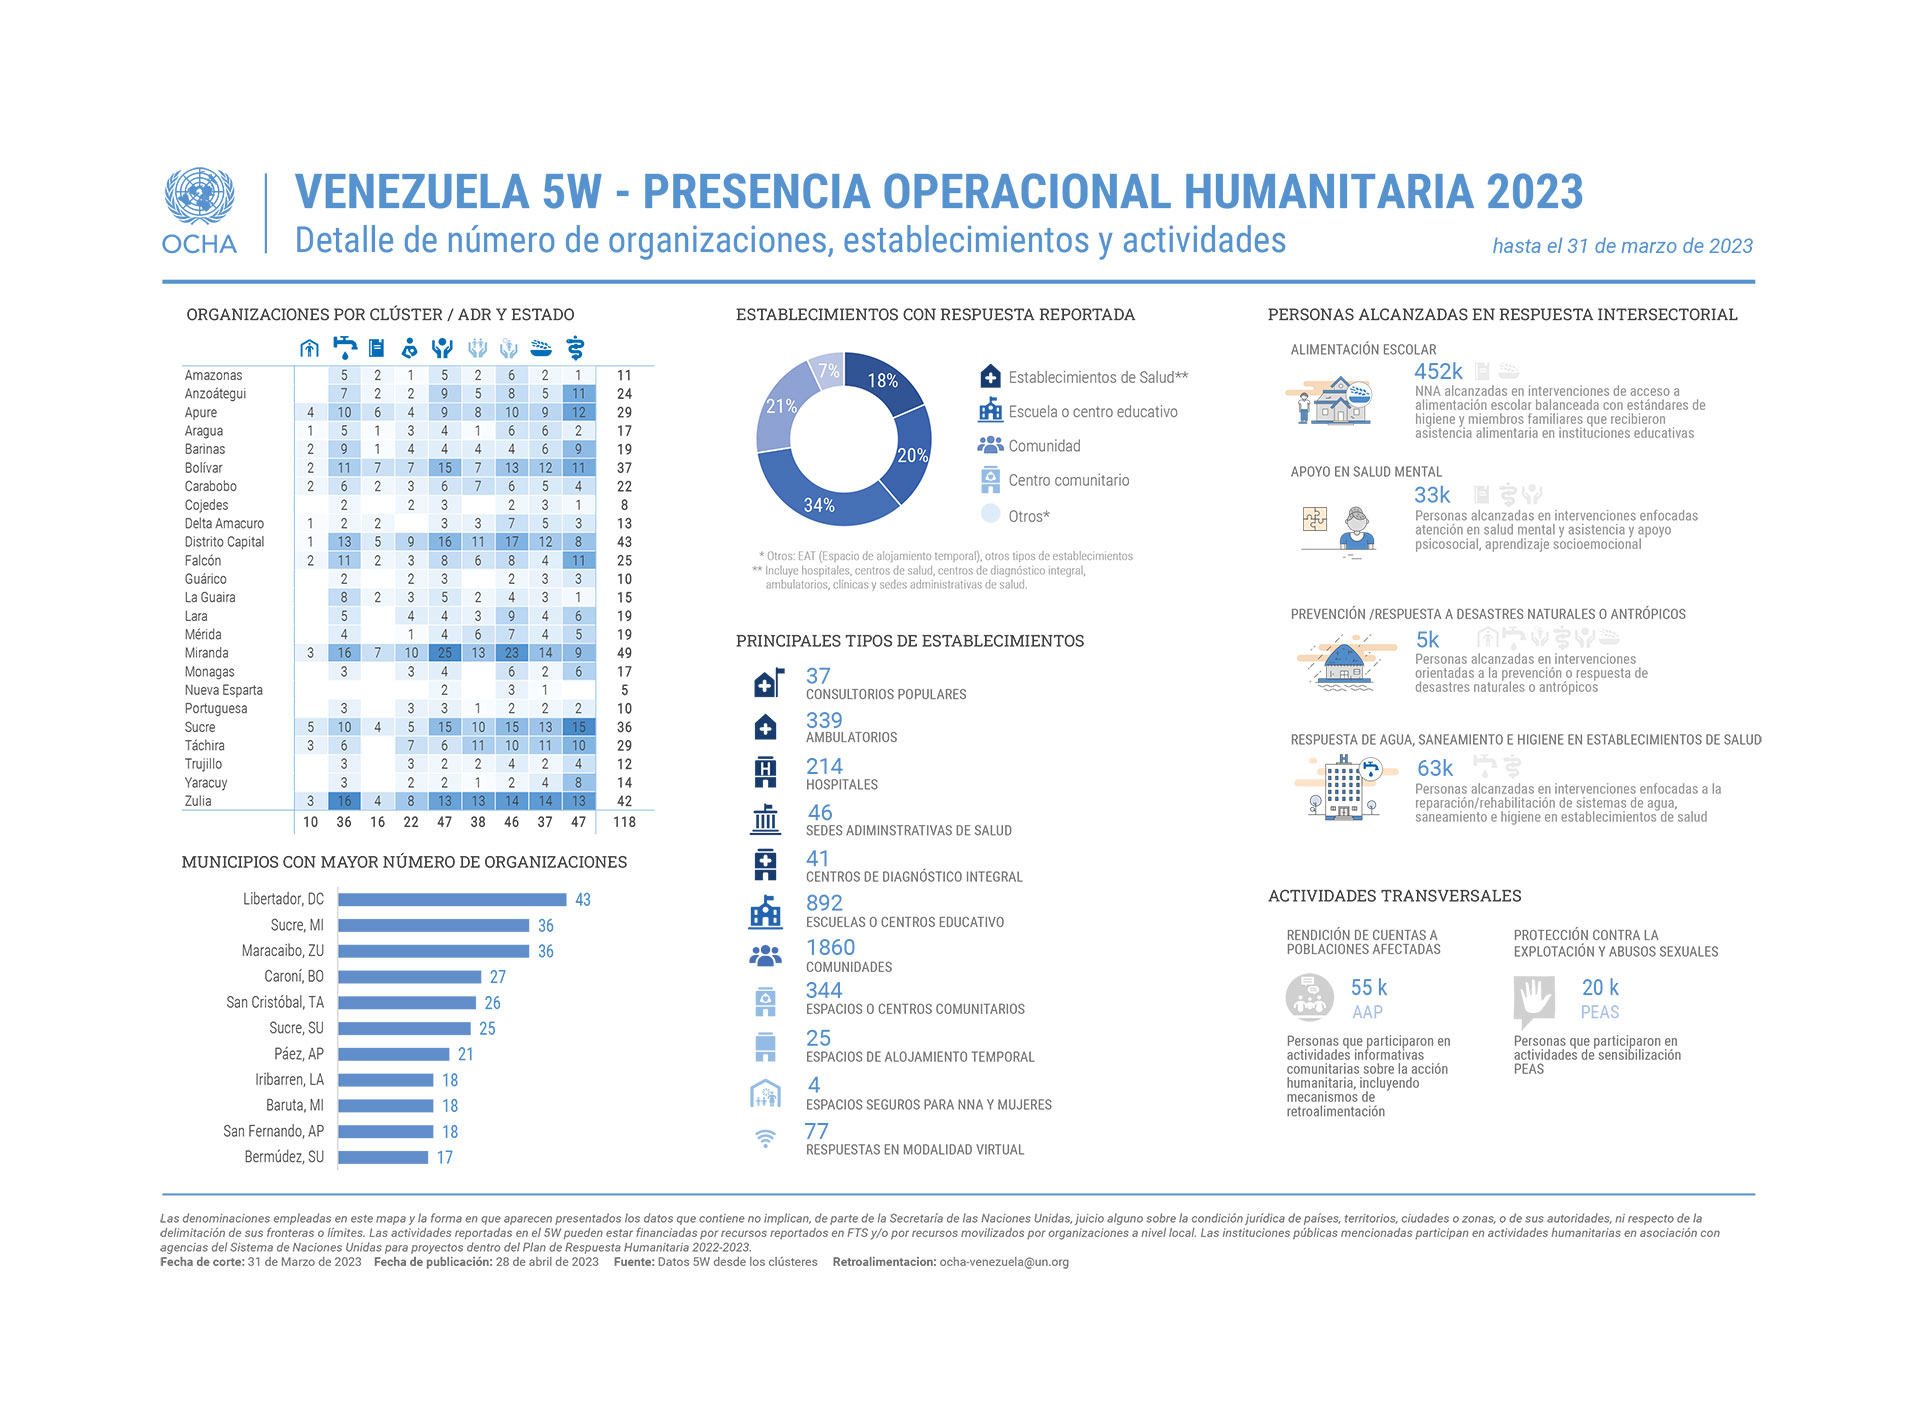 Presencia operacional humanitaria (OCHA Venezuela)